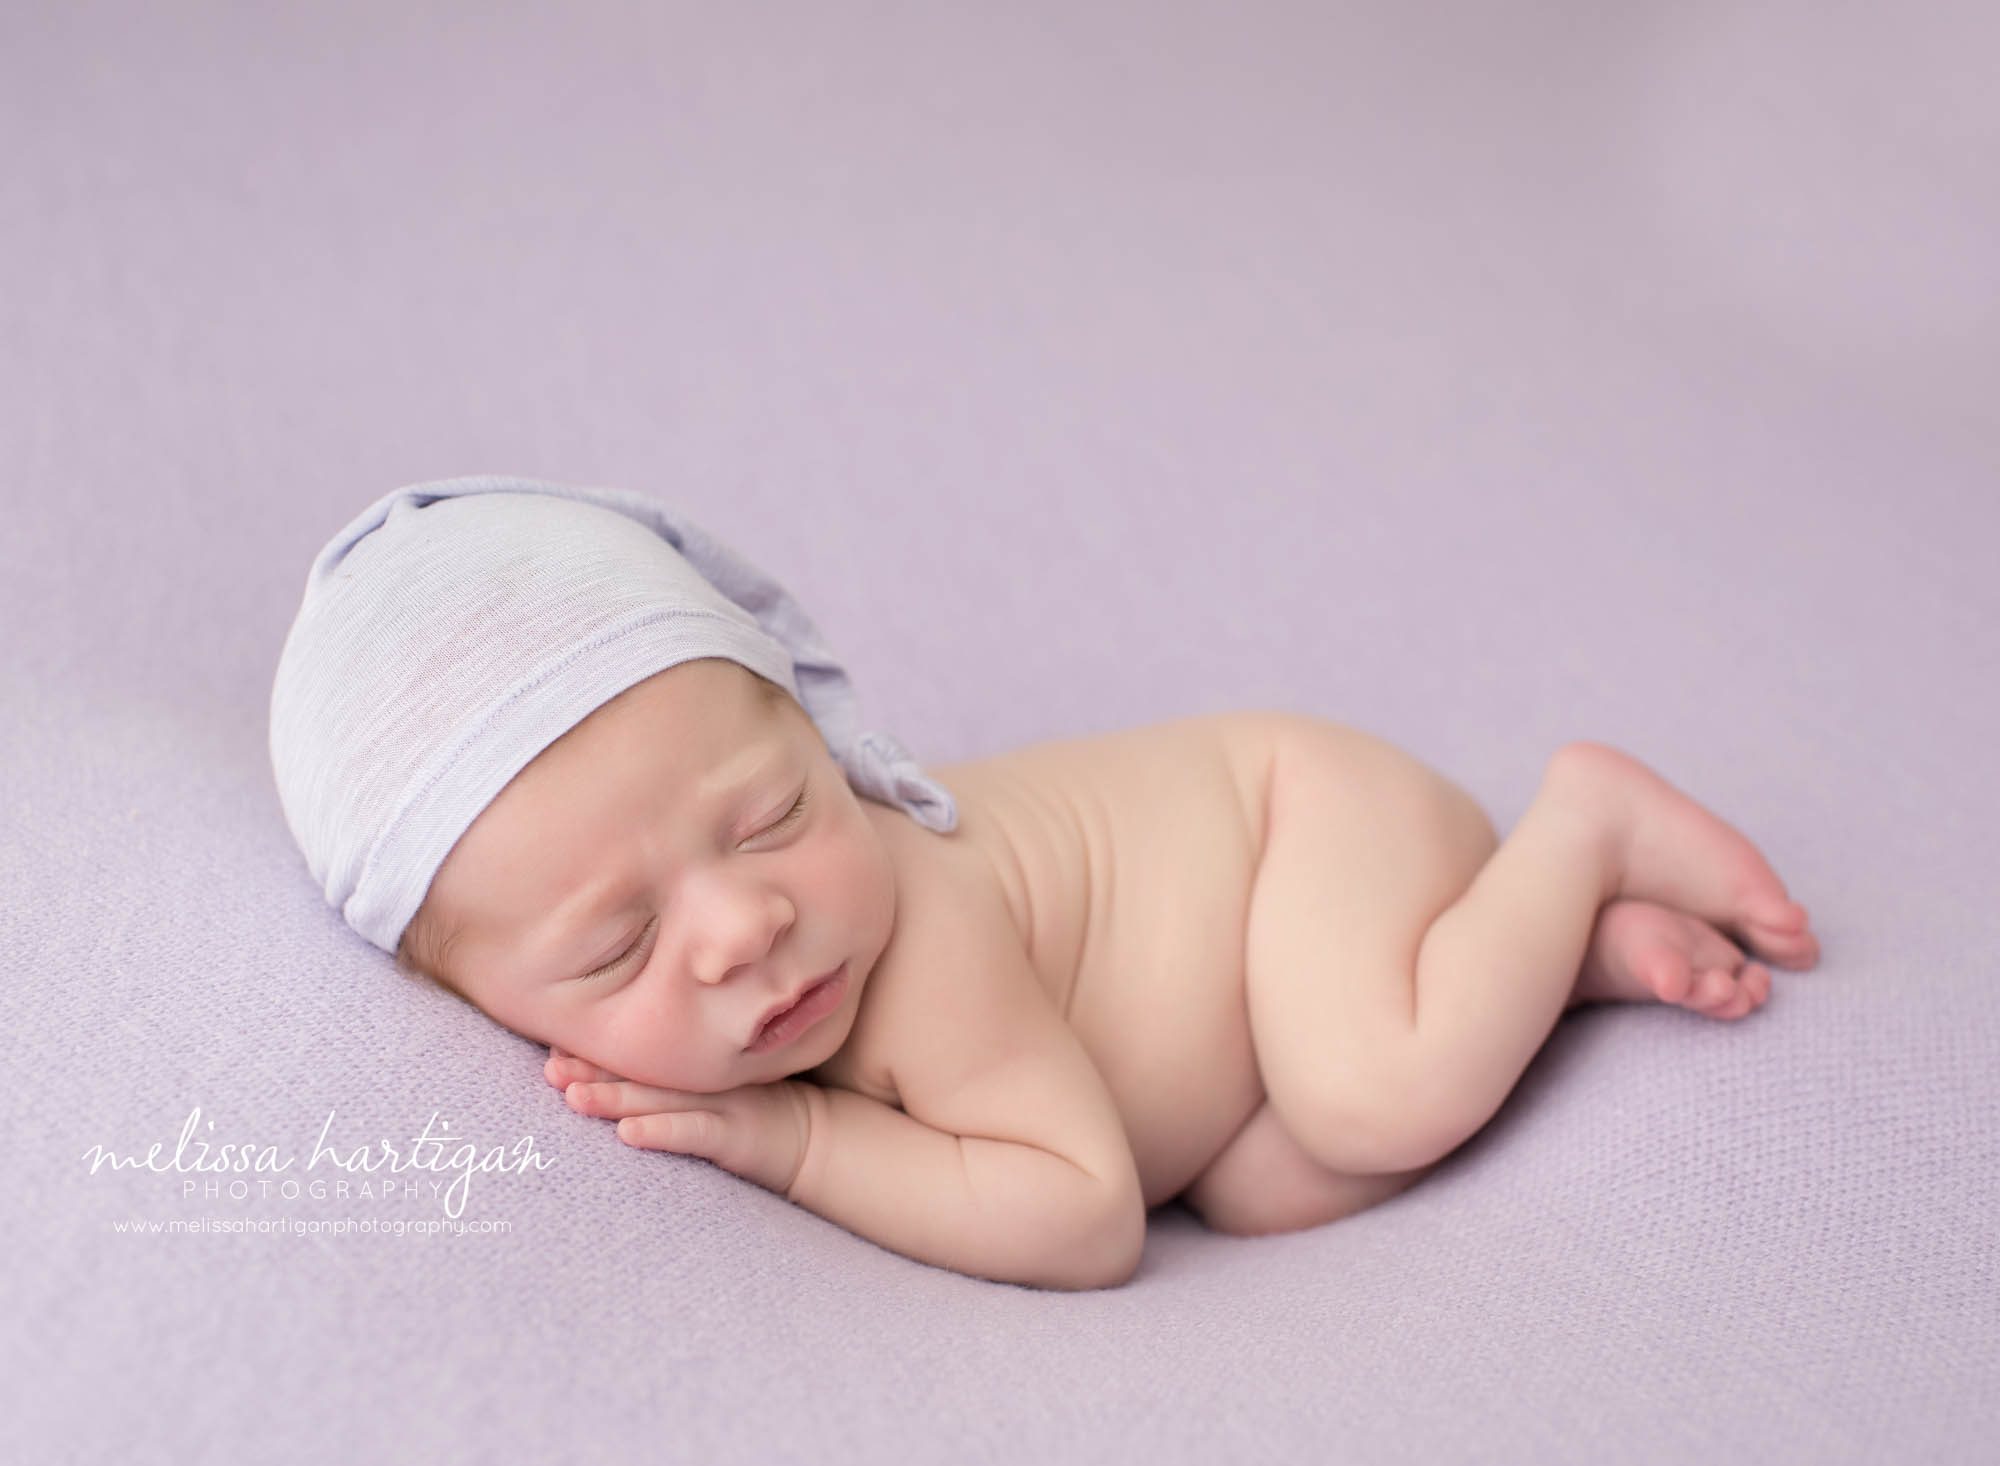 newborn baby girl posed on side with hand under cheek wearing light purple sleepy cap